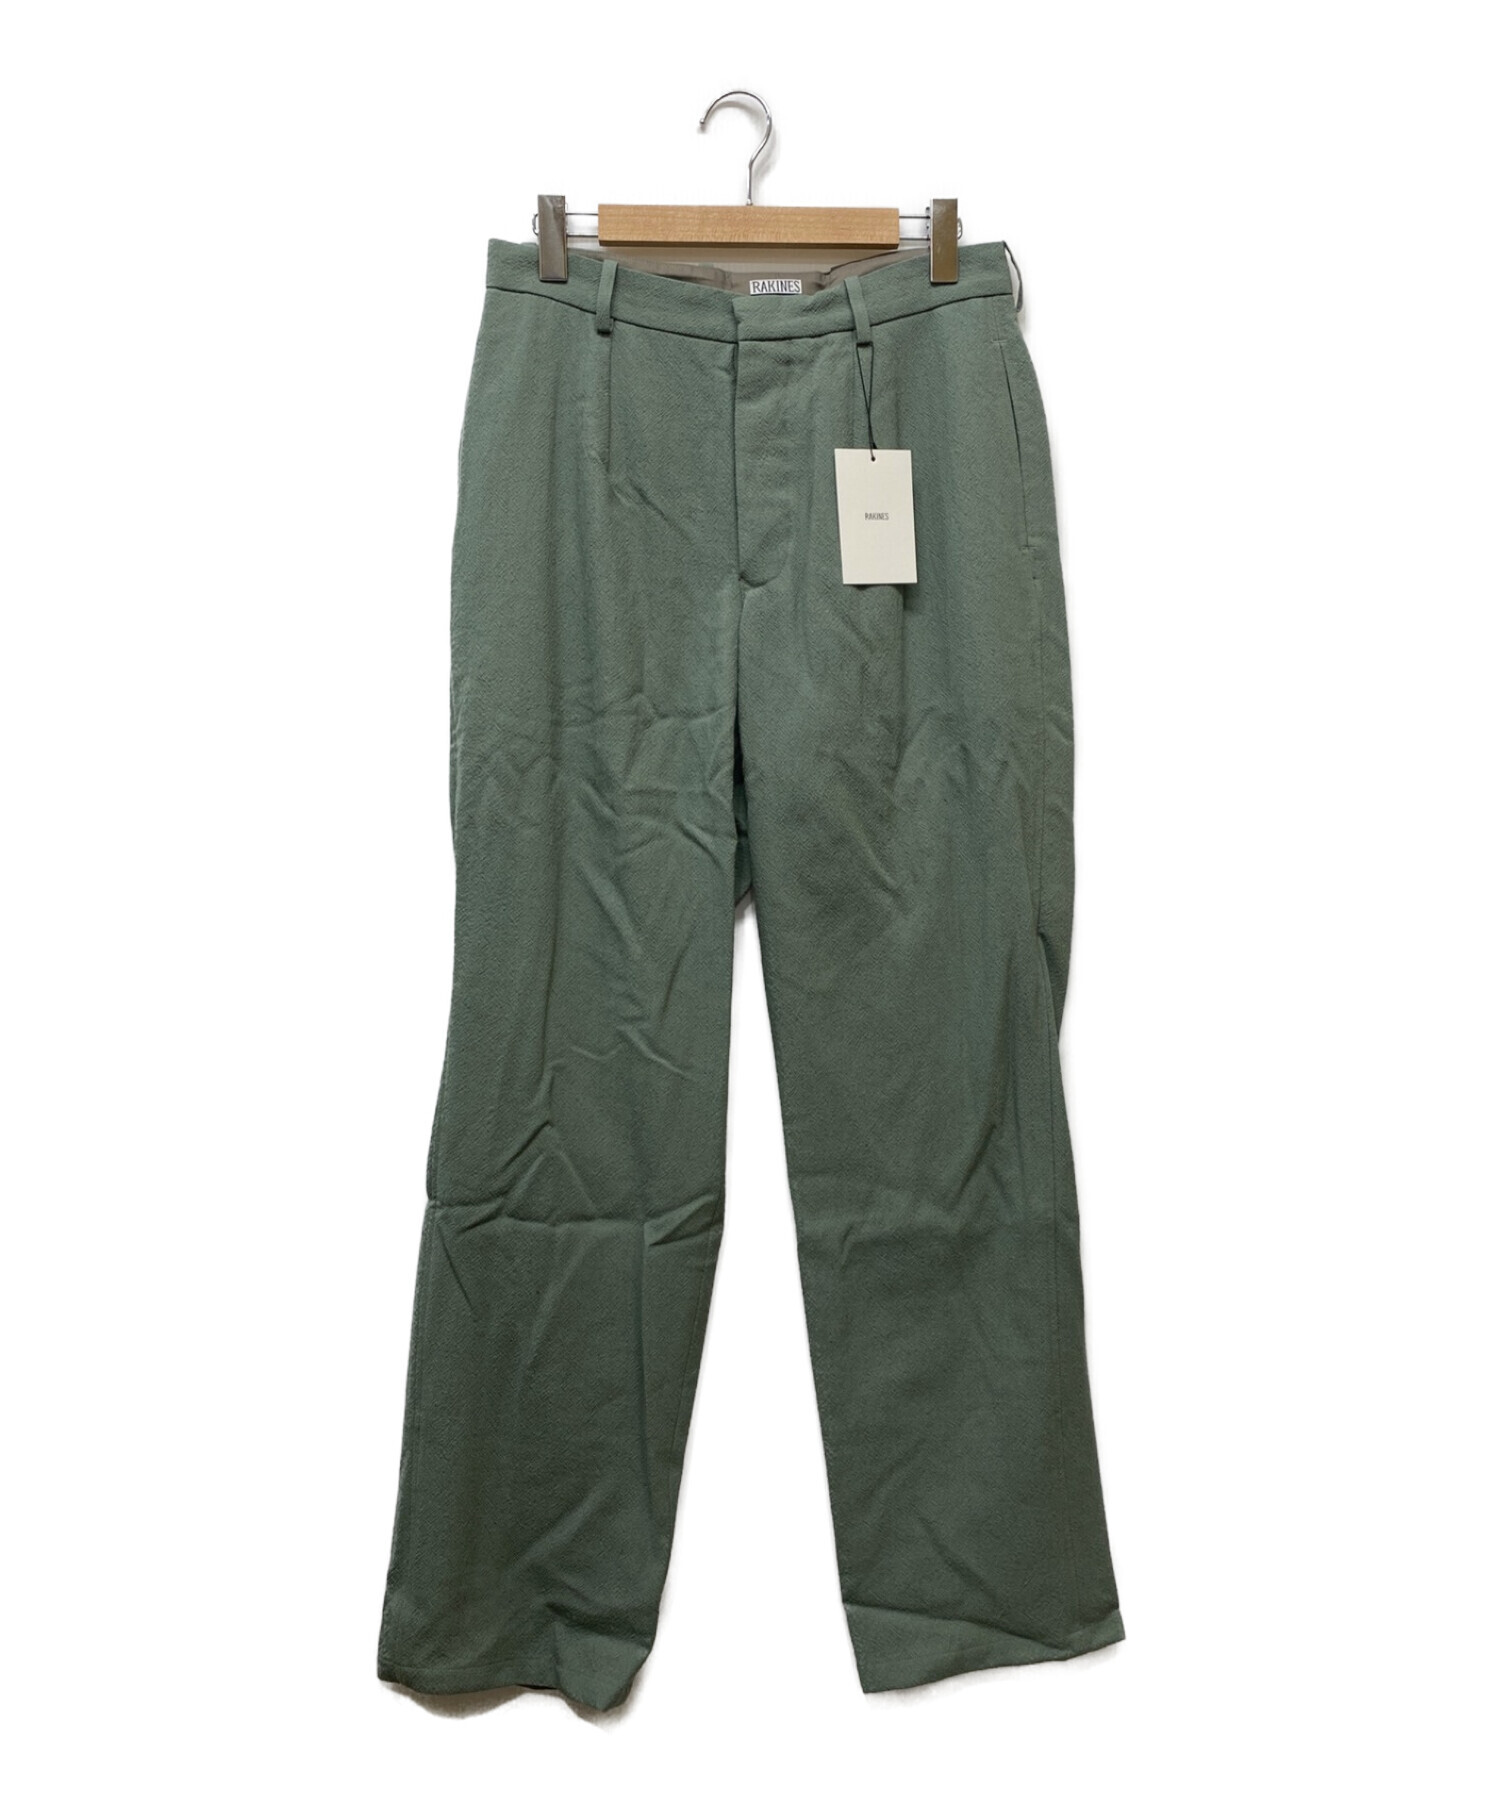 RAKINES (ラキネス) Rigid washer tropical R-pants グリーン サイズ:2 未使用品